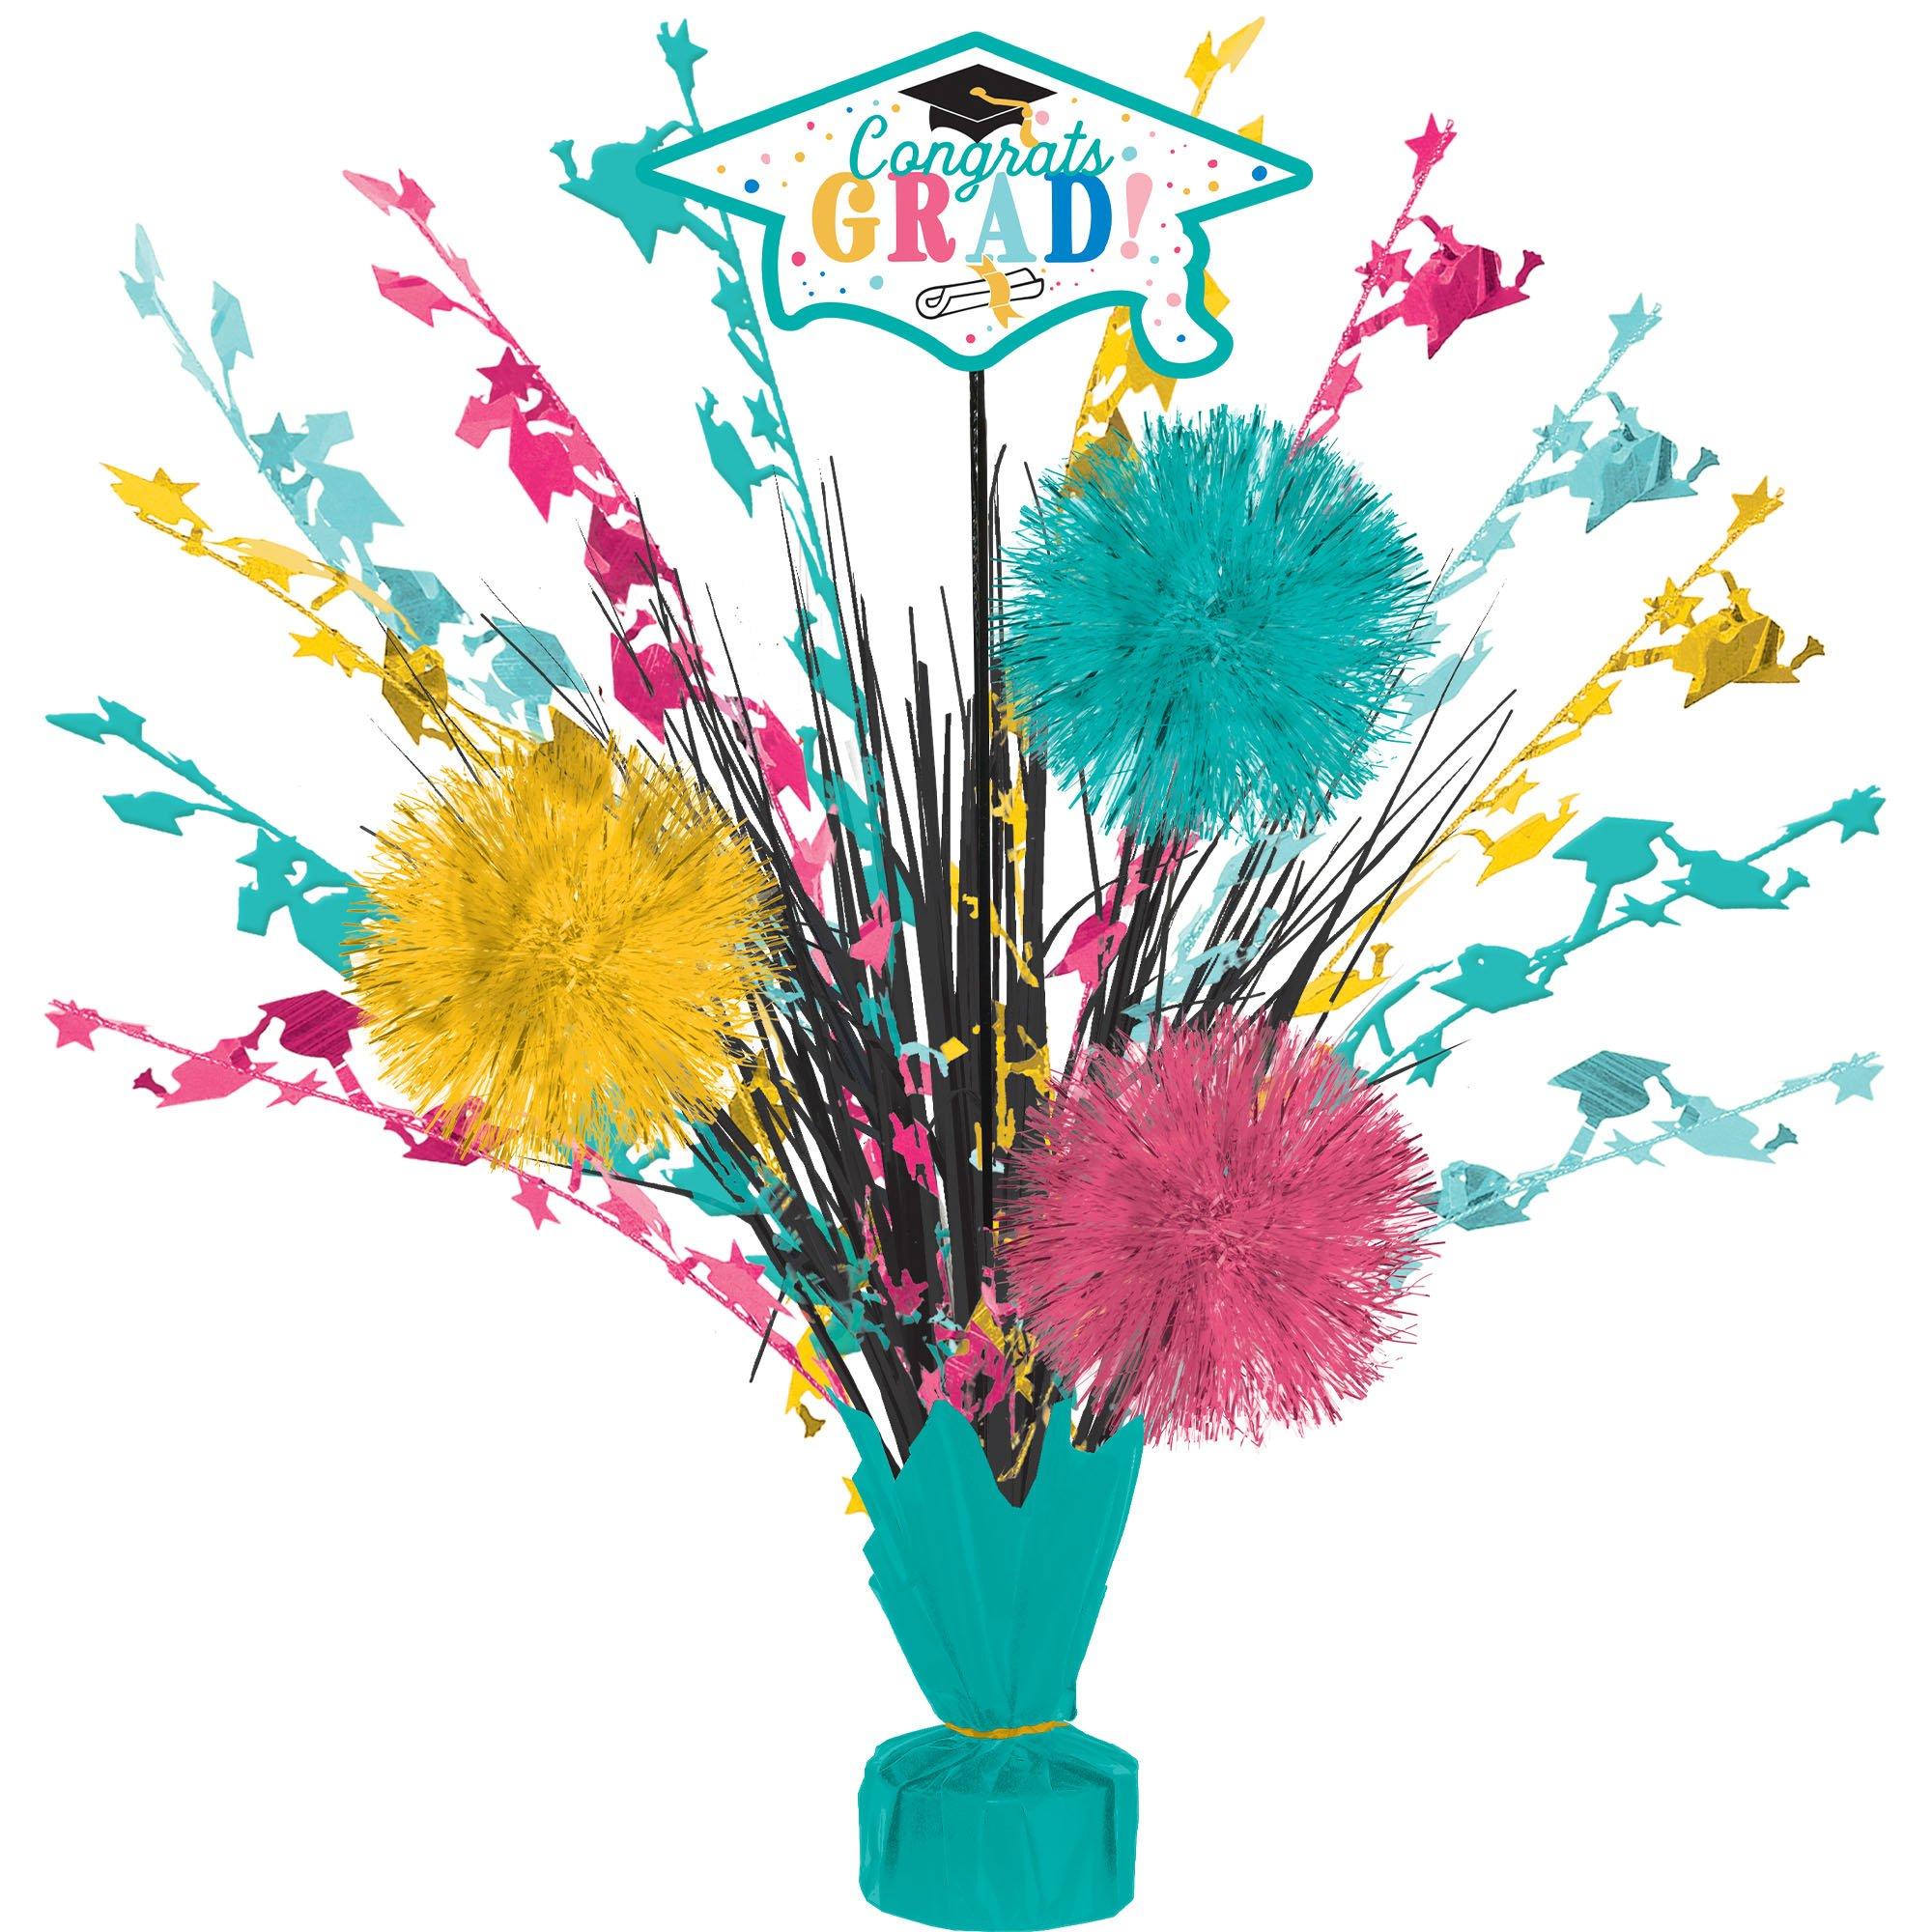 Tepsmf Balloon Spray 100ml - Instant Gloss & Vibrant Finish - Enhance Party  Decor - Birthdays, Weddings, Special Events - Easy Application 